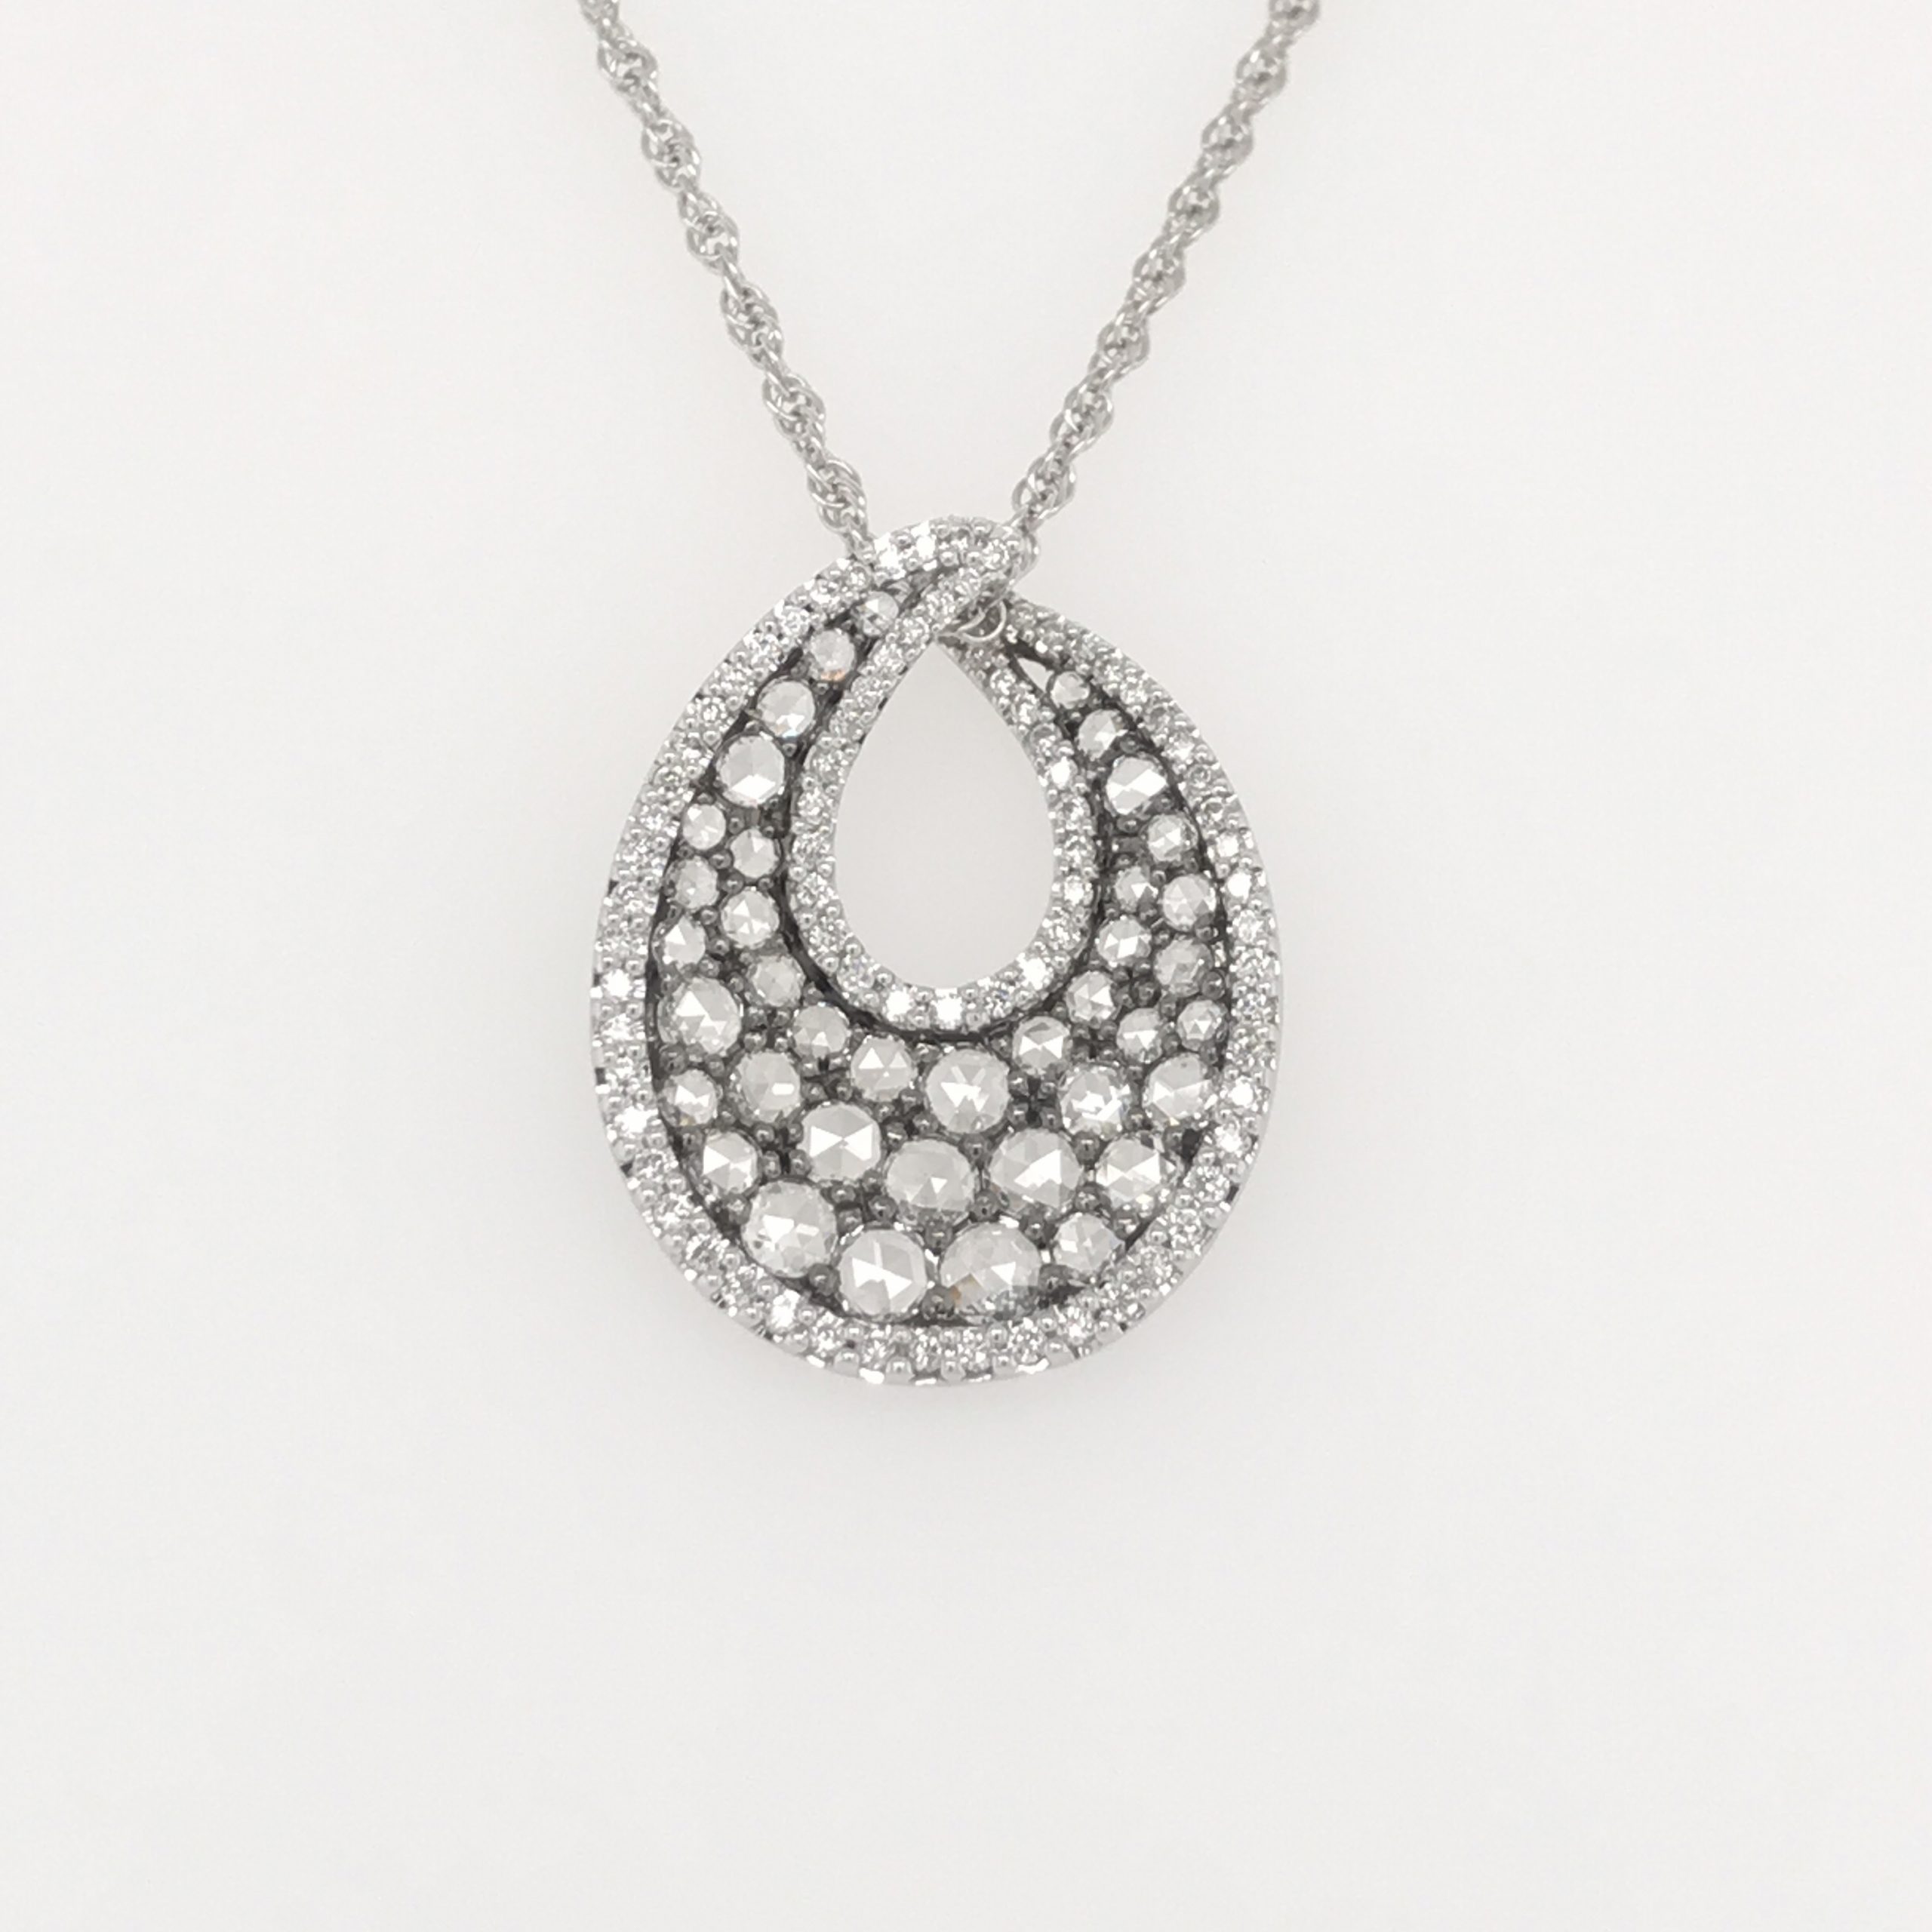 Pave diamond rosecut pendant 925 sterling silver pendant handmade diamond pendant  beautiful spike design pave diamond  pendant charm